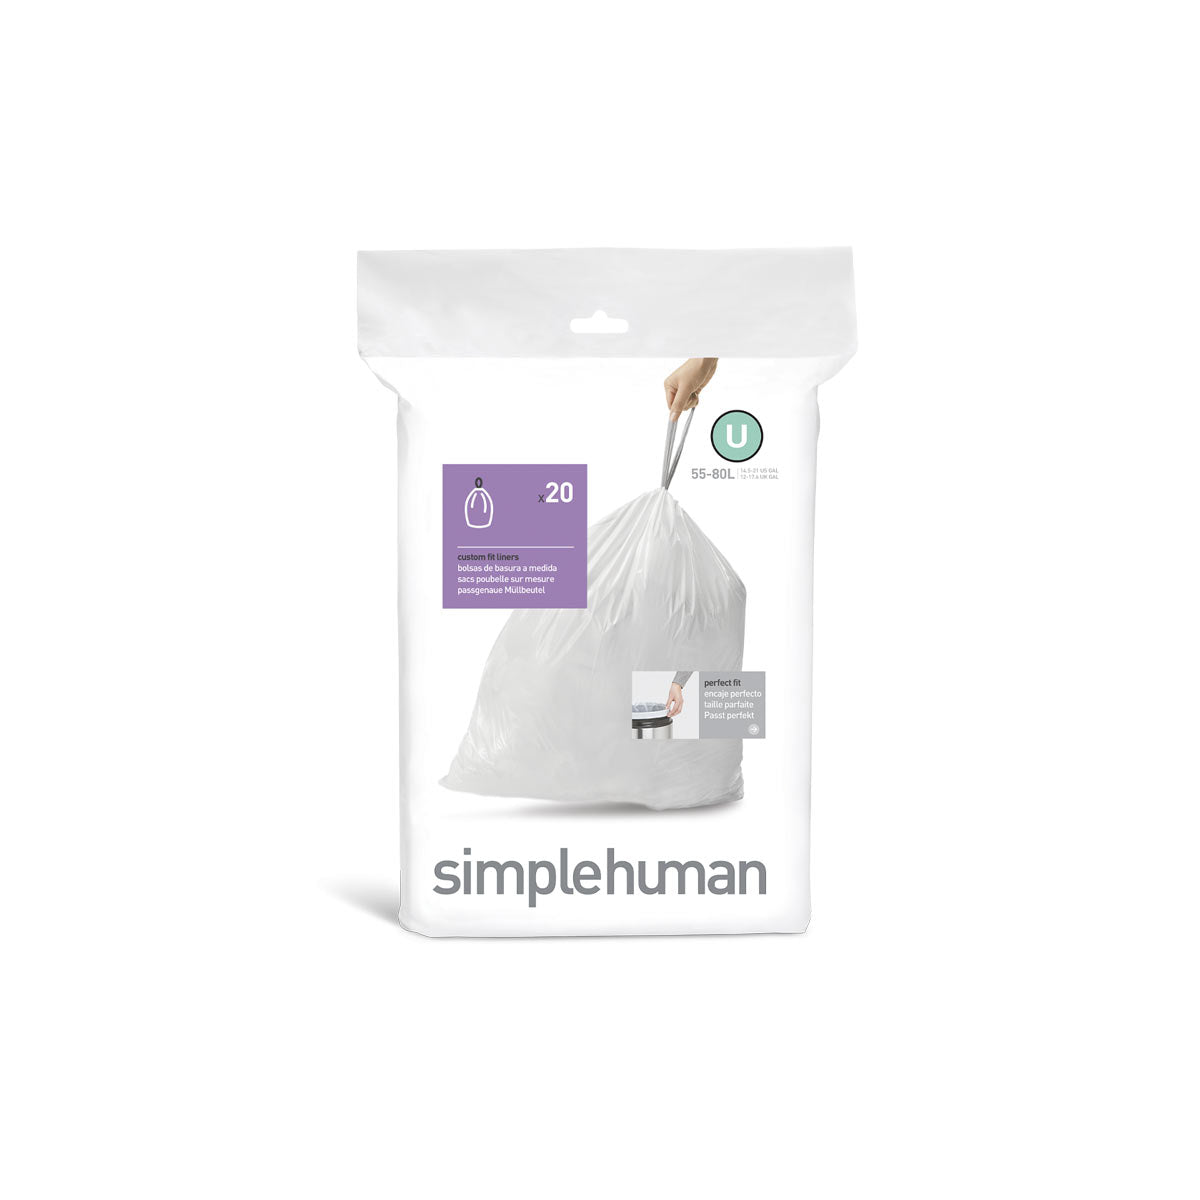 simplehuman® Trash Liners - Code P S-23528 - Uline